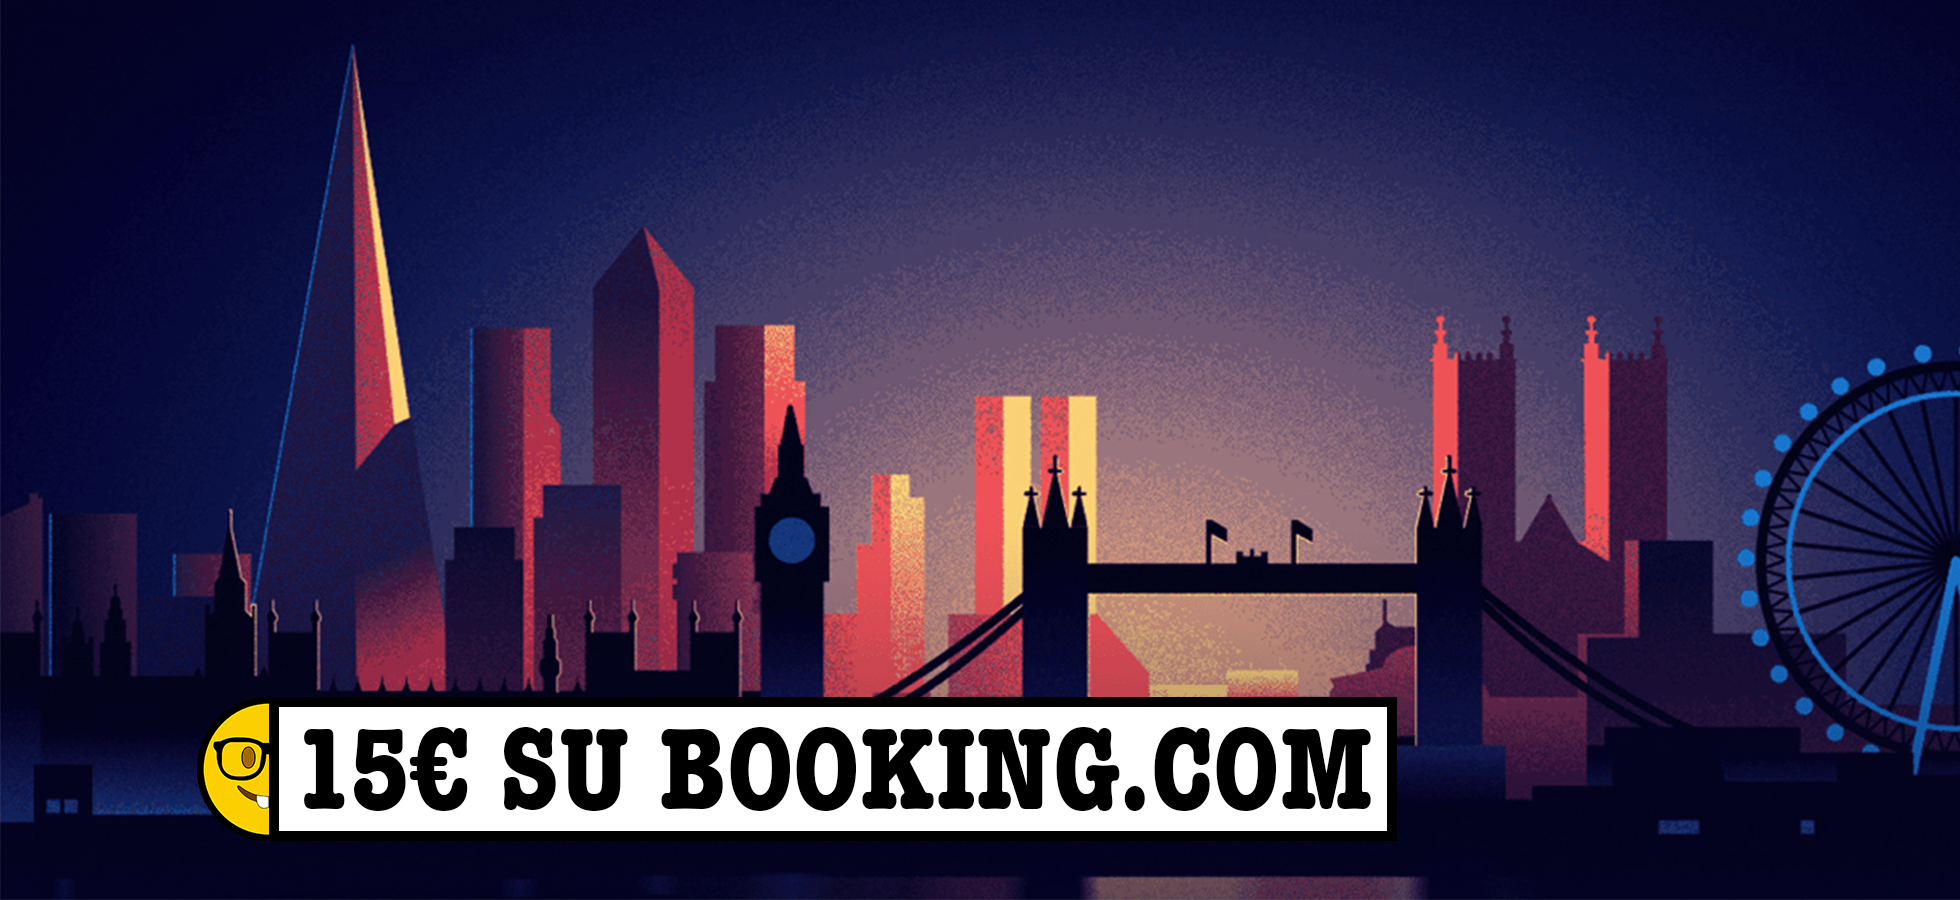 Ttbooking ru. Booking. Booking реклама. Реклама букинга. Booking.com реклама.